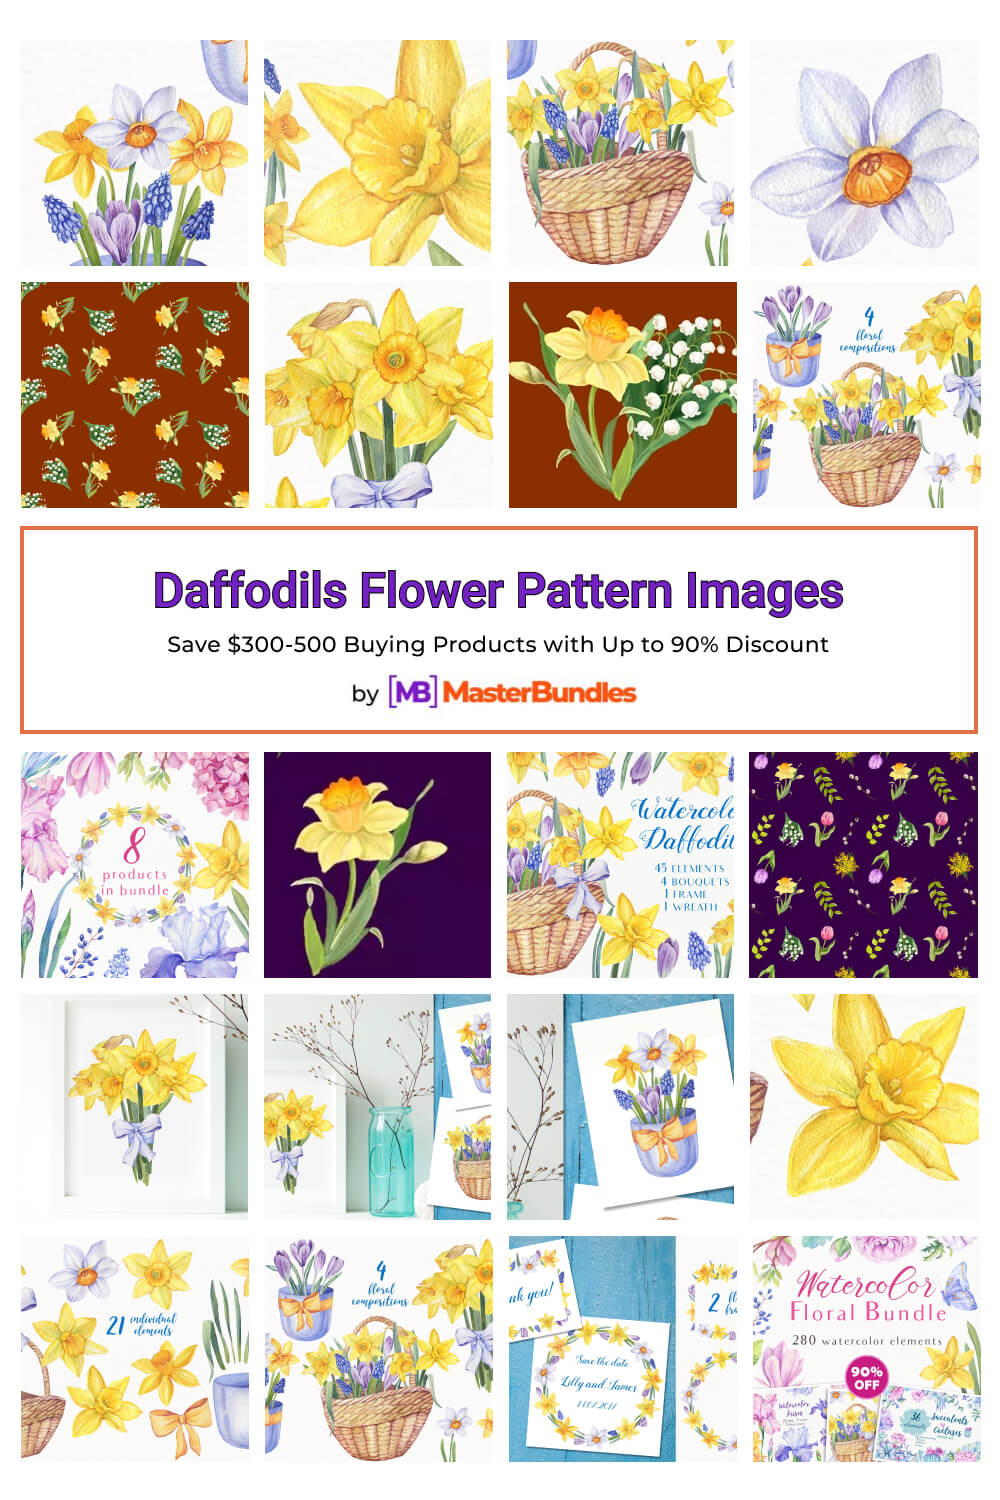 daffodils flower pattern images pinterest image.